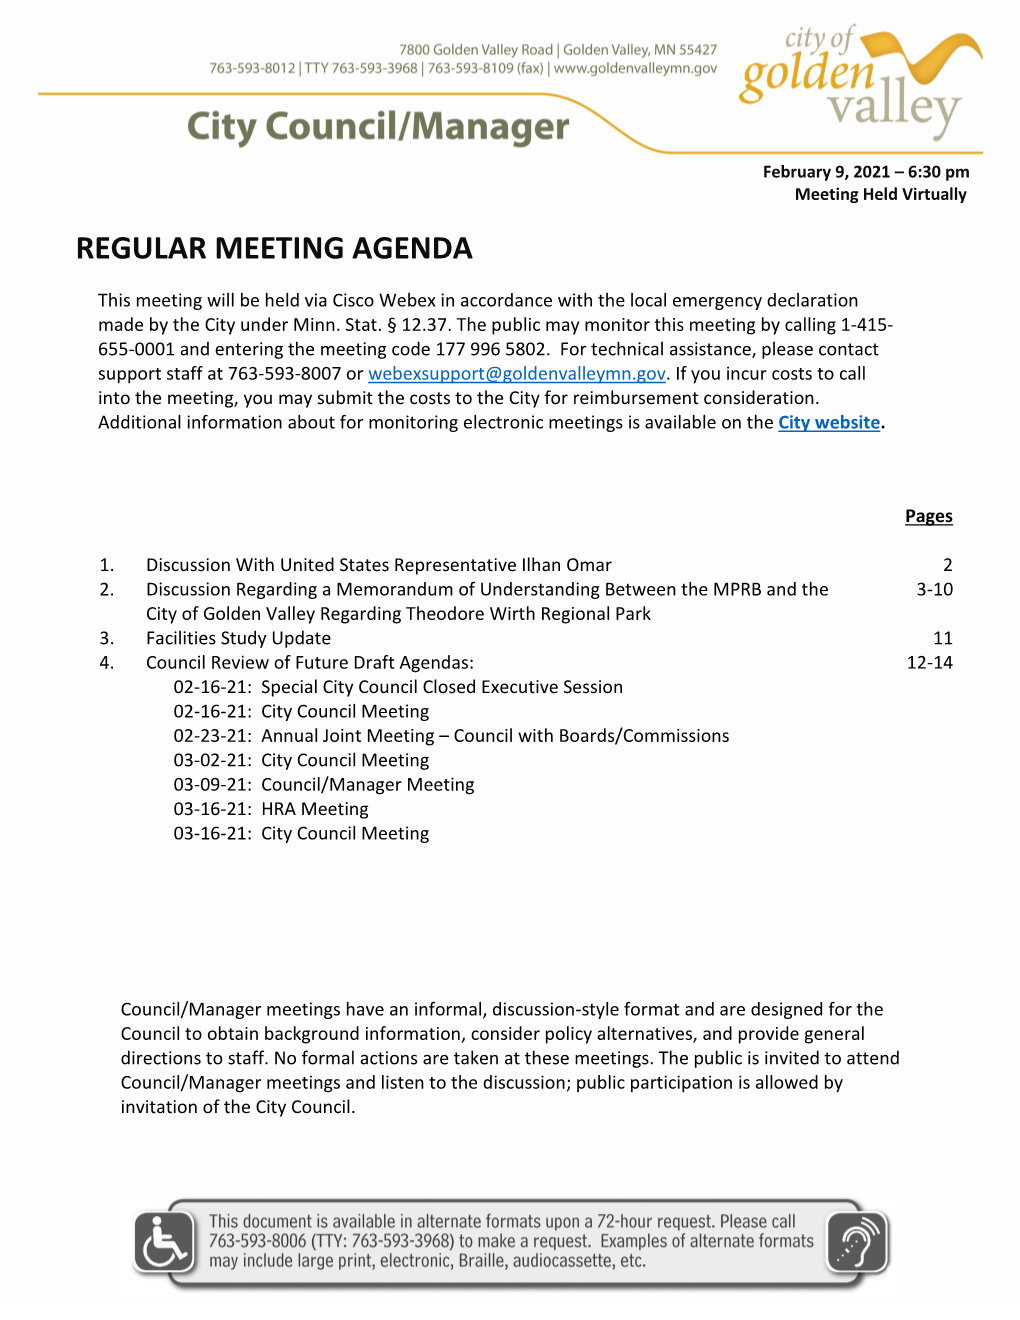 Regular Meeting Agenda